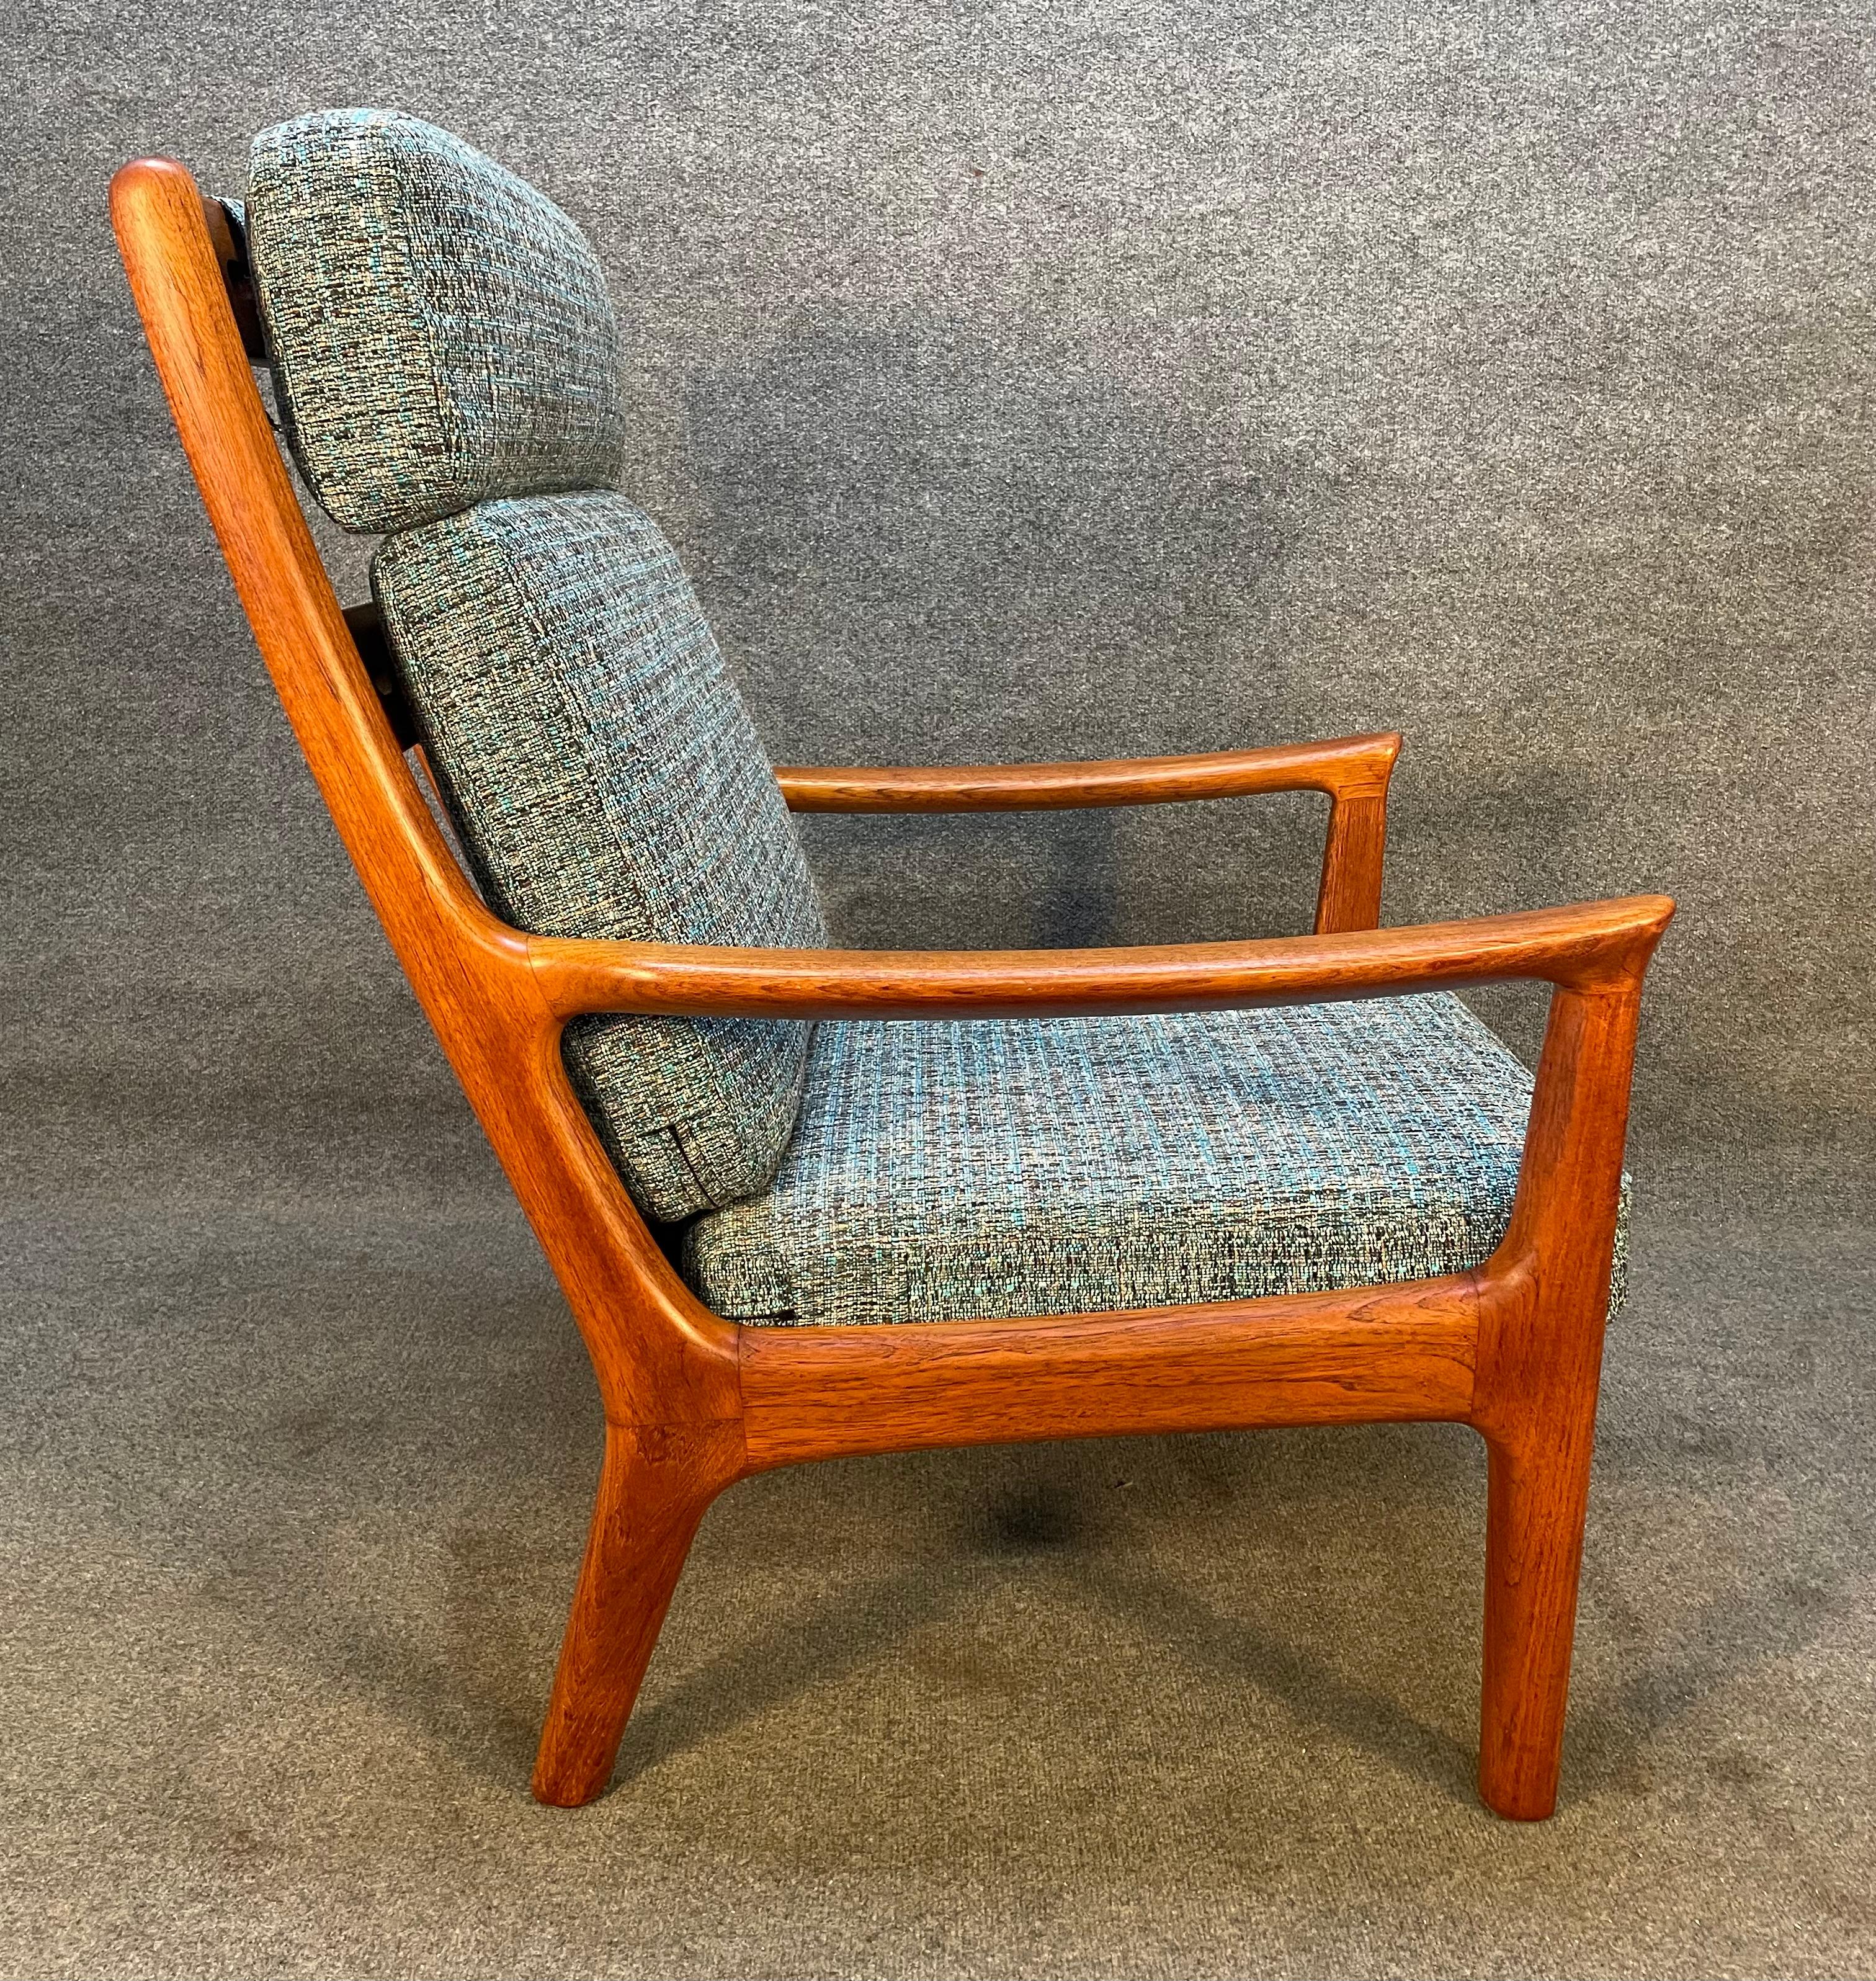 Scandinavian Modern Vintage Danish Mid-Century Teak Lounge Chair Attributed to Ole Wanscher